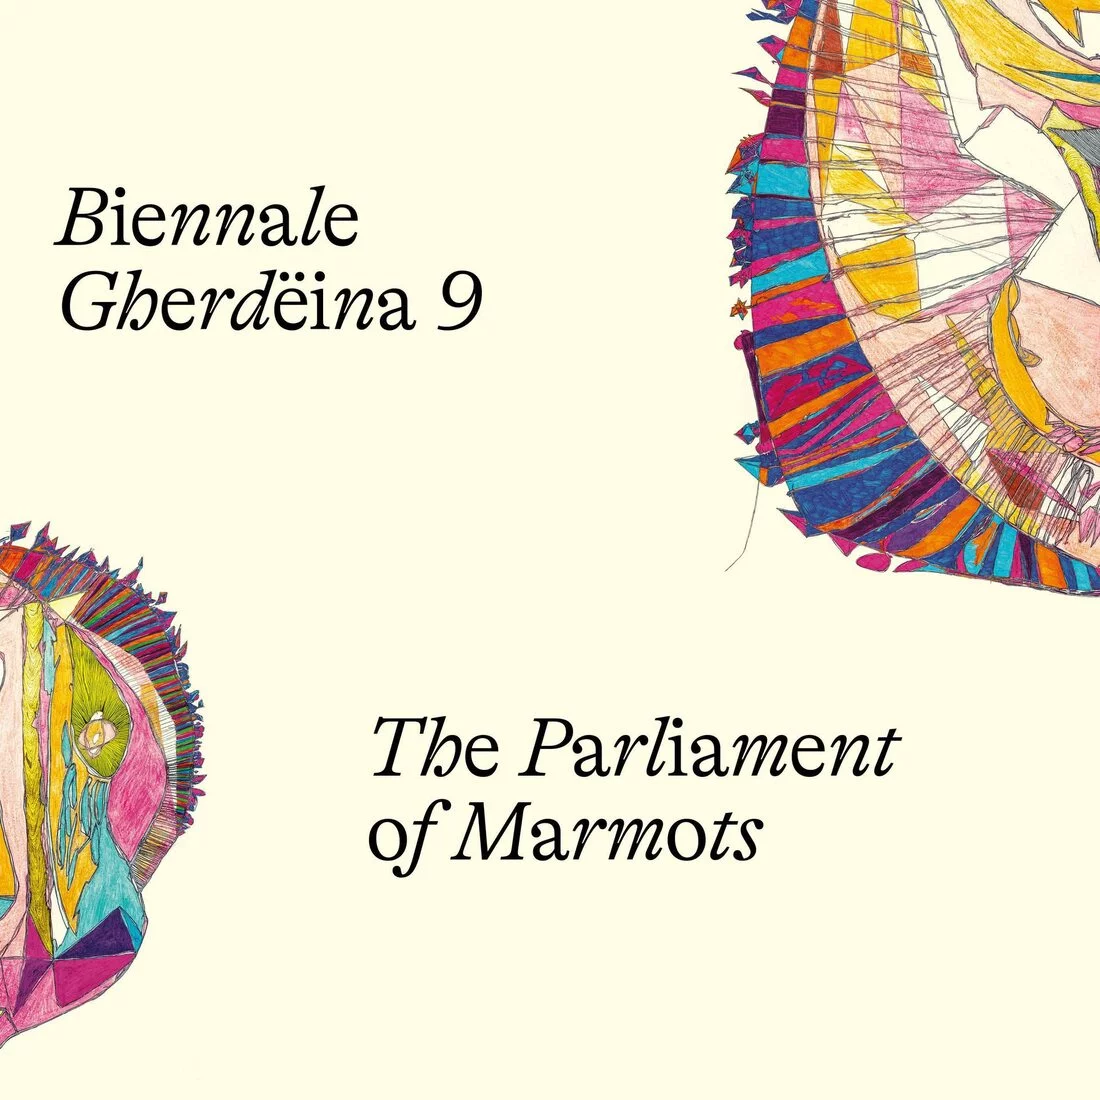 Biennale Gherdëina 9 - The Parliament of Marmots